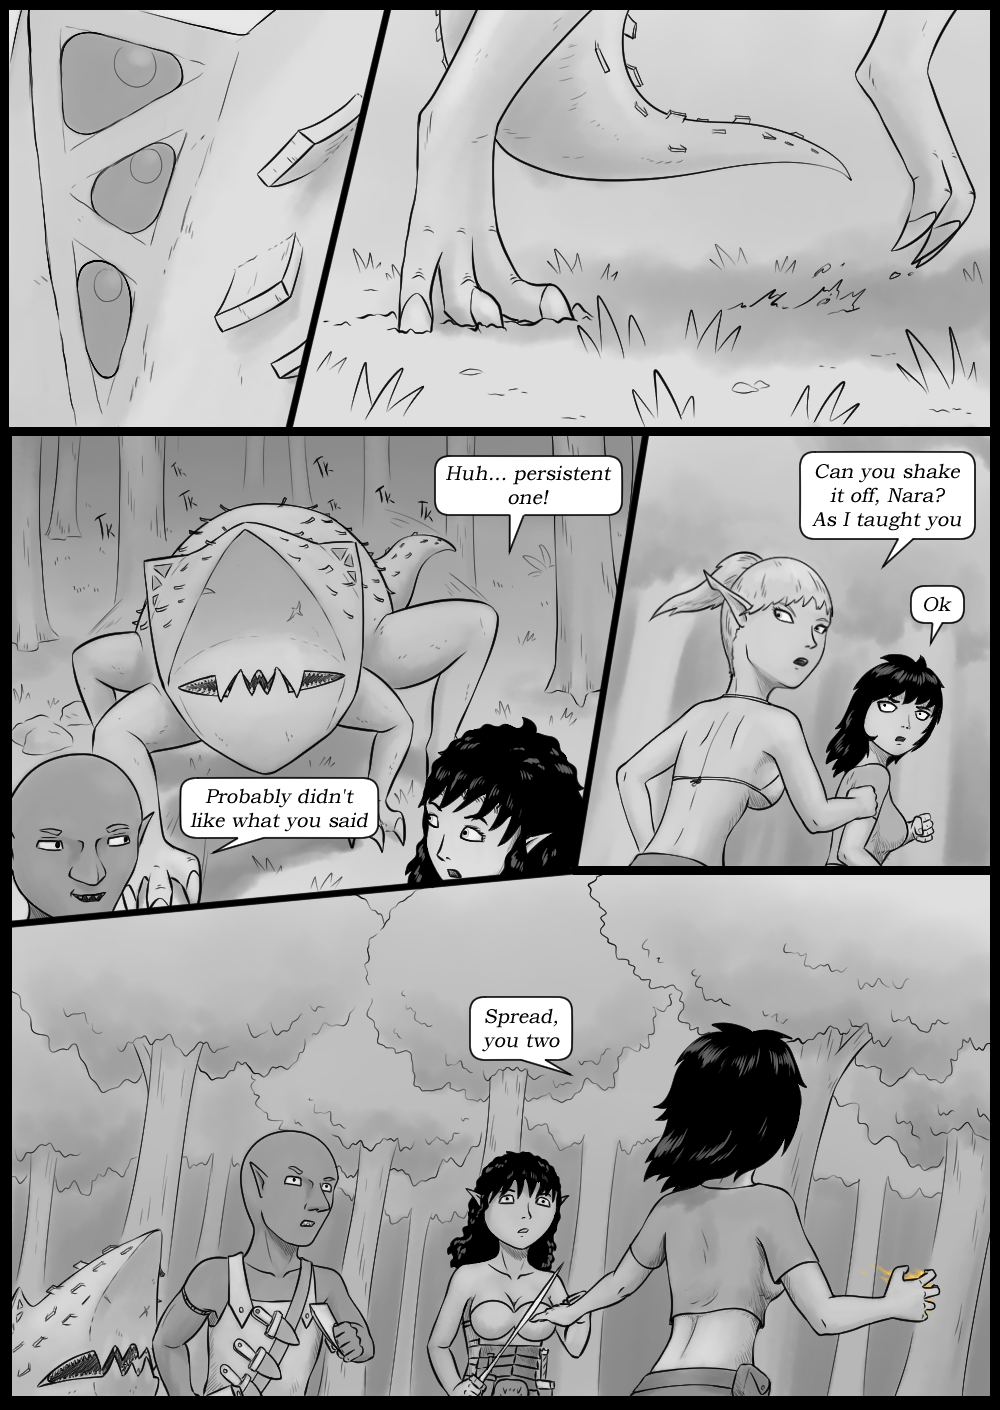 Page 46 - Clickhide chase (Part 2)